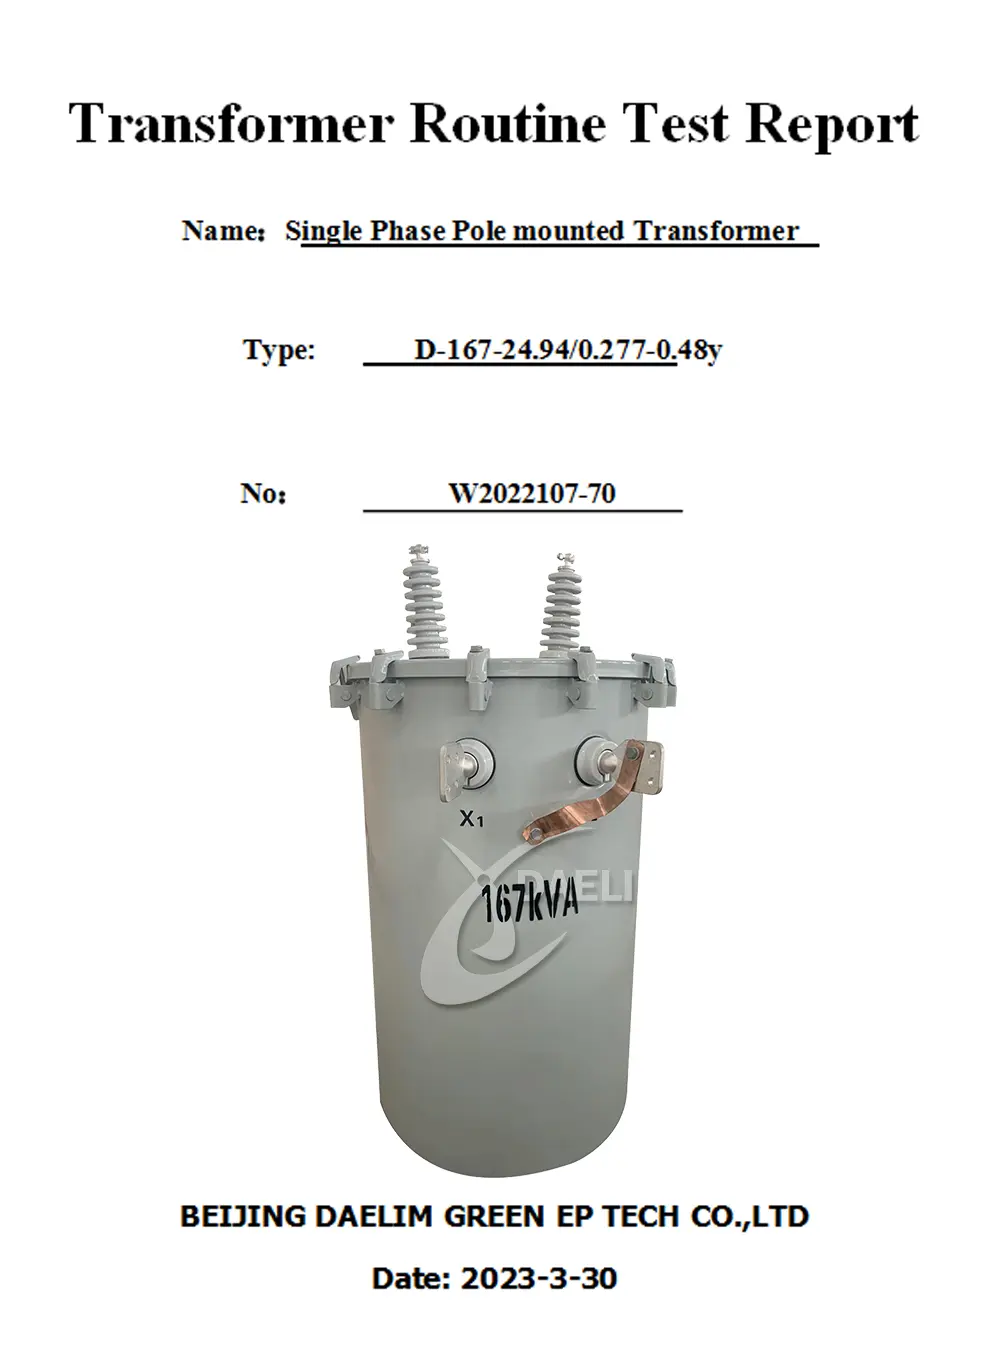 167 kVA Transformer Test Report